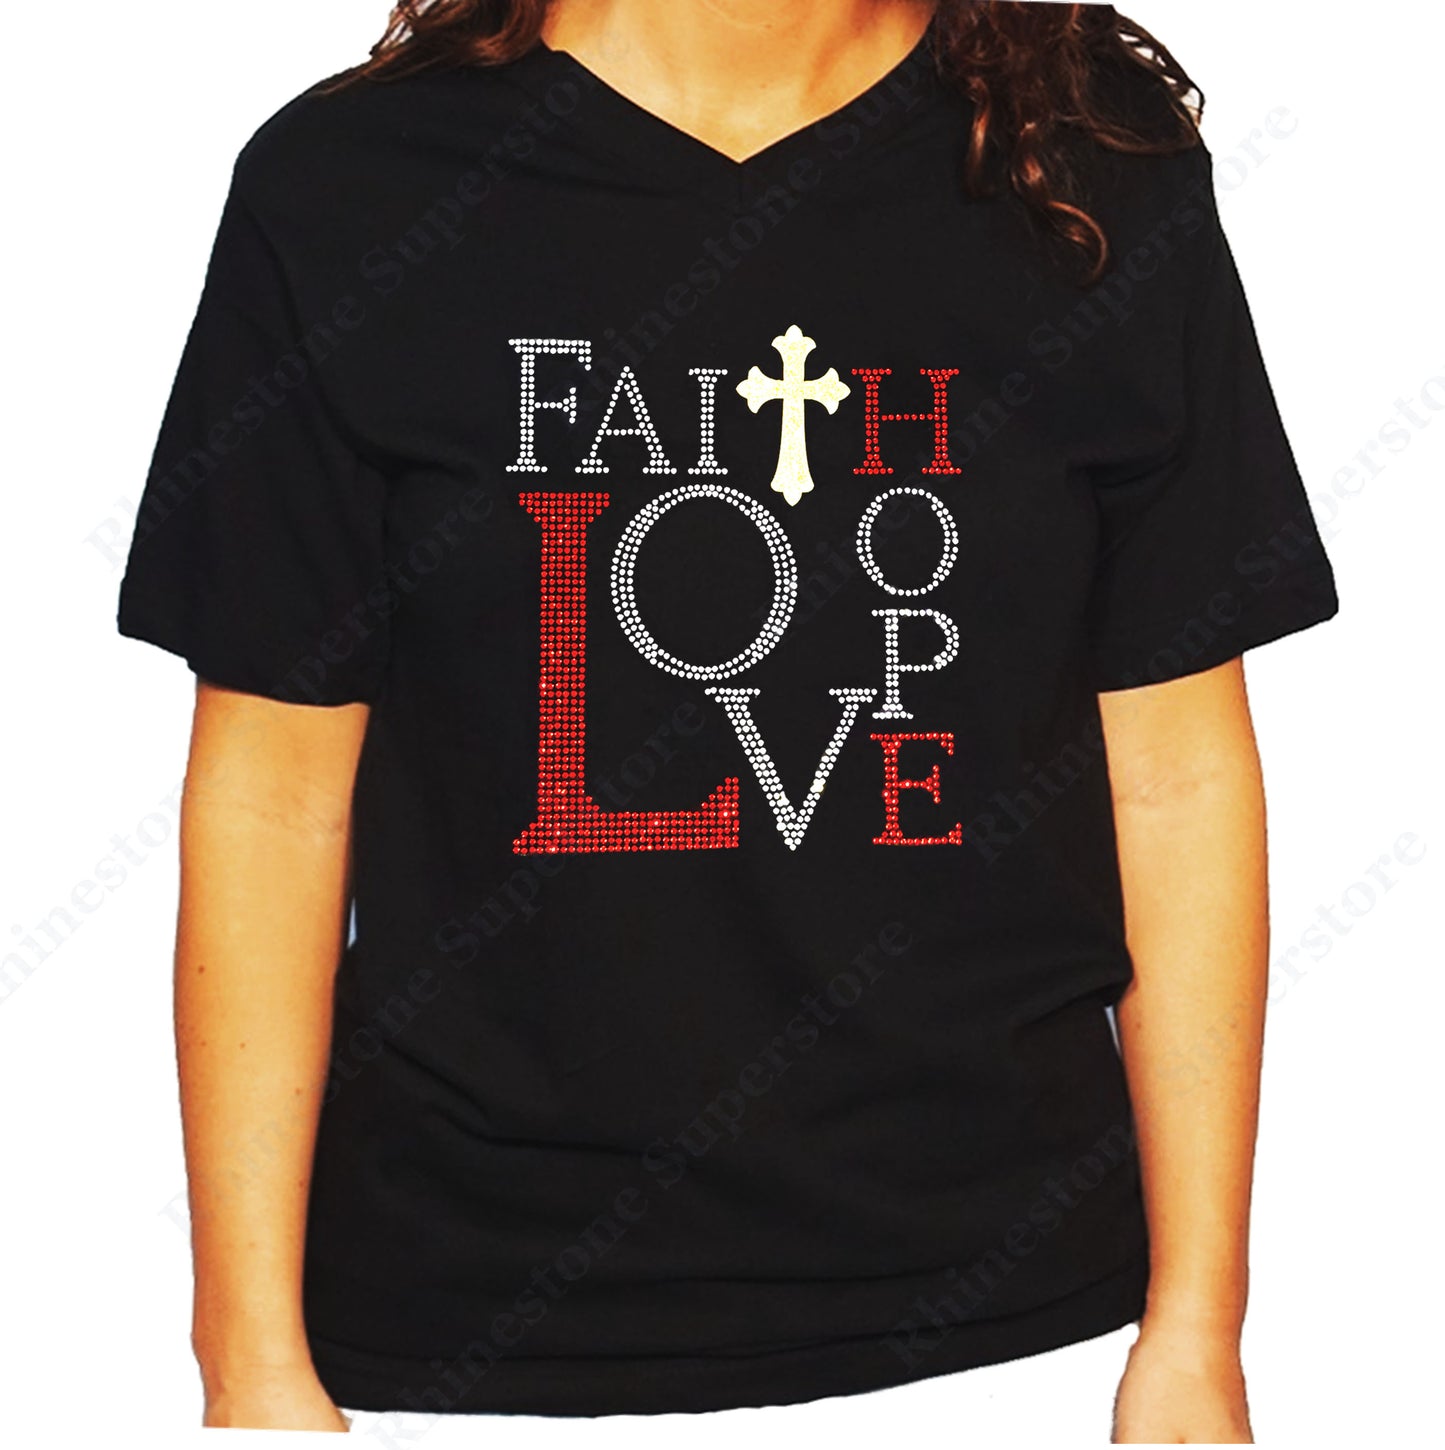 Women's / Unisex T-Shirt with Faith, Love, Hope in Rhinestones